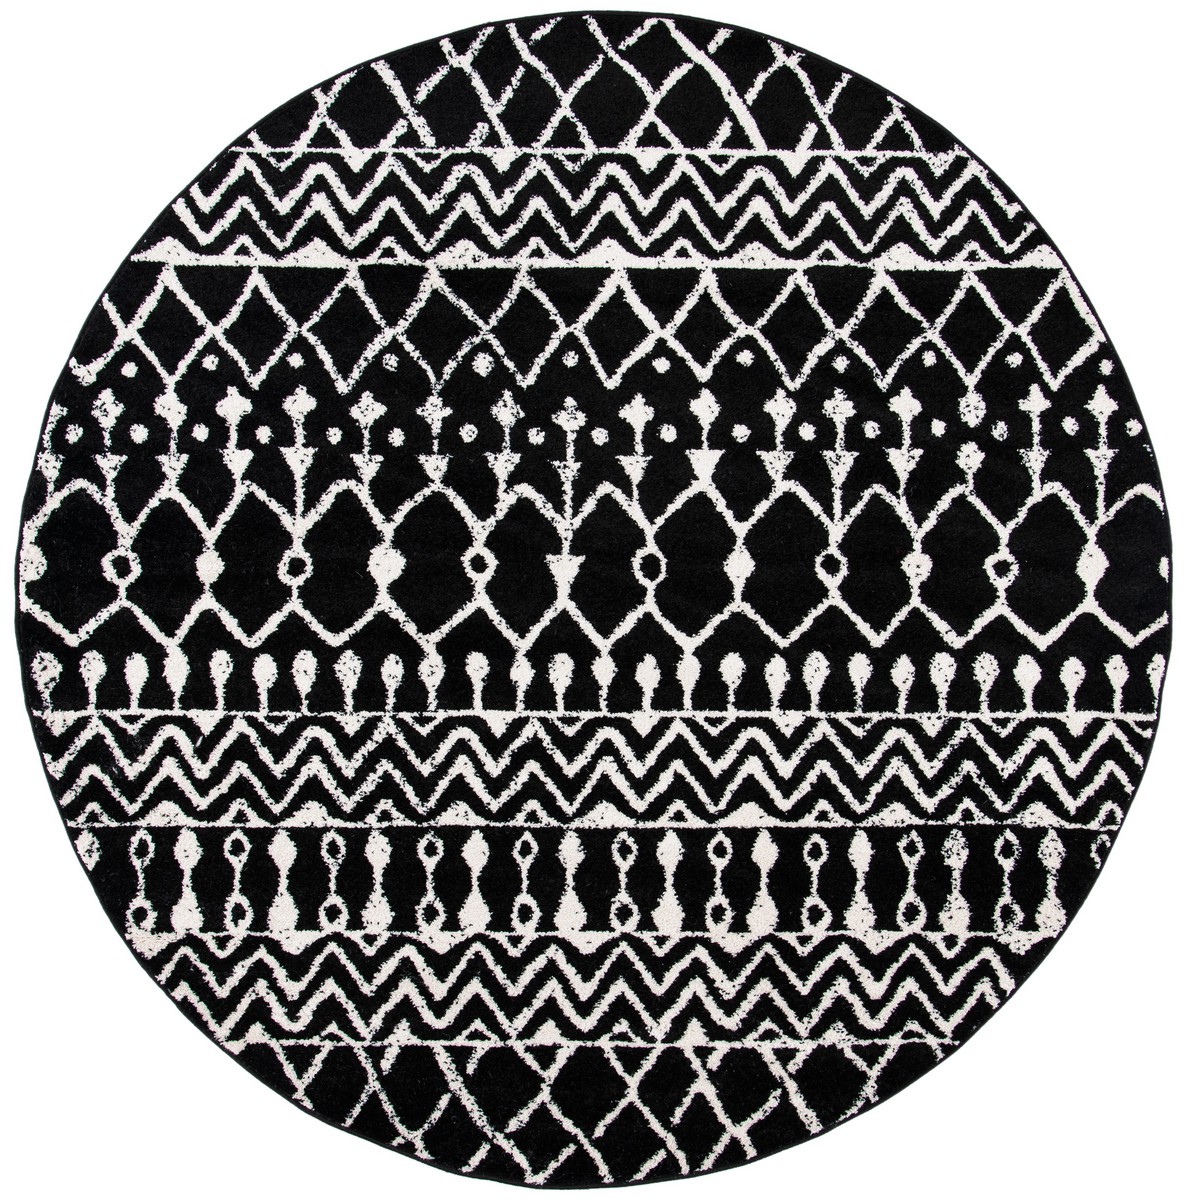 SAFAVIEH Tulum Glen Moroccan Geometric Area Rug, 5' x 5' Round, Black/Ivory - image 1 of 7